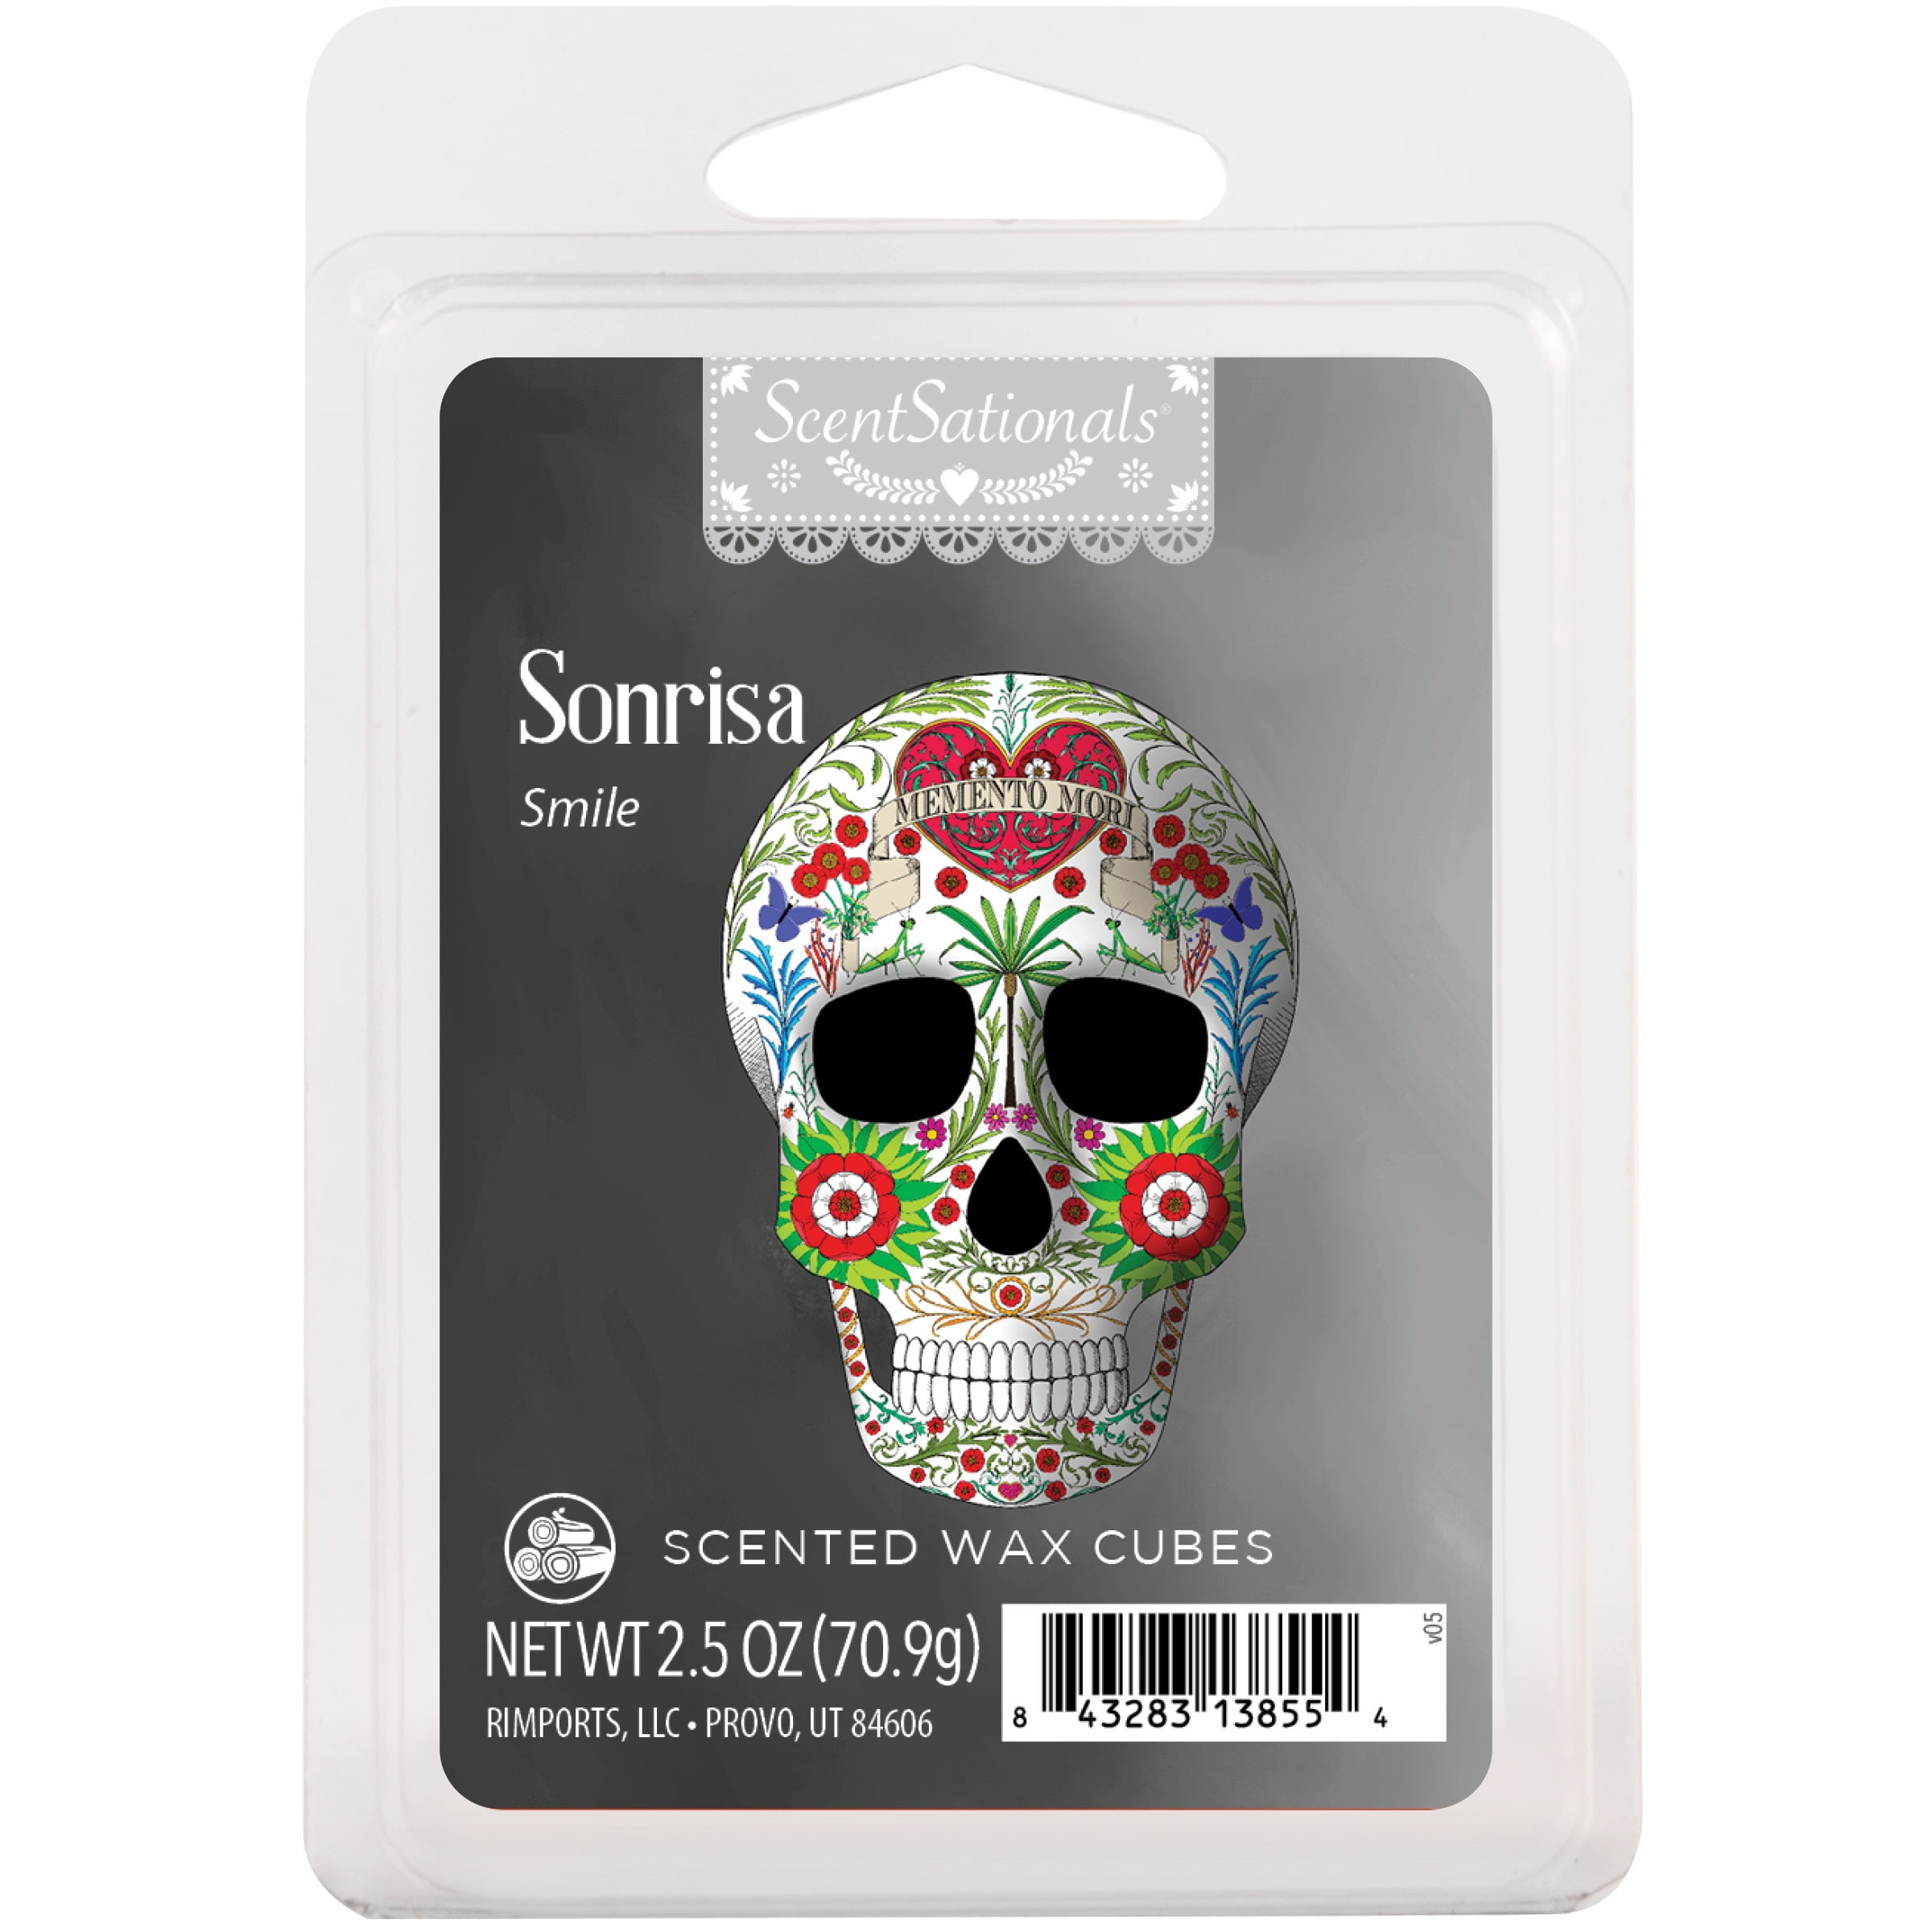 La Sonrisa (Smile Of The Dead) Scented Wax Melts, ScentSationals, 2.5 oz (1-Pack)